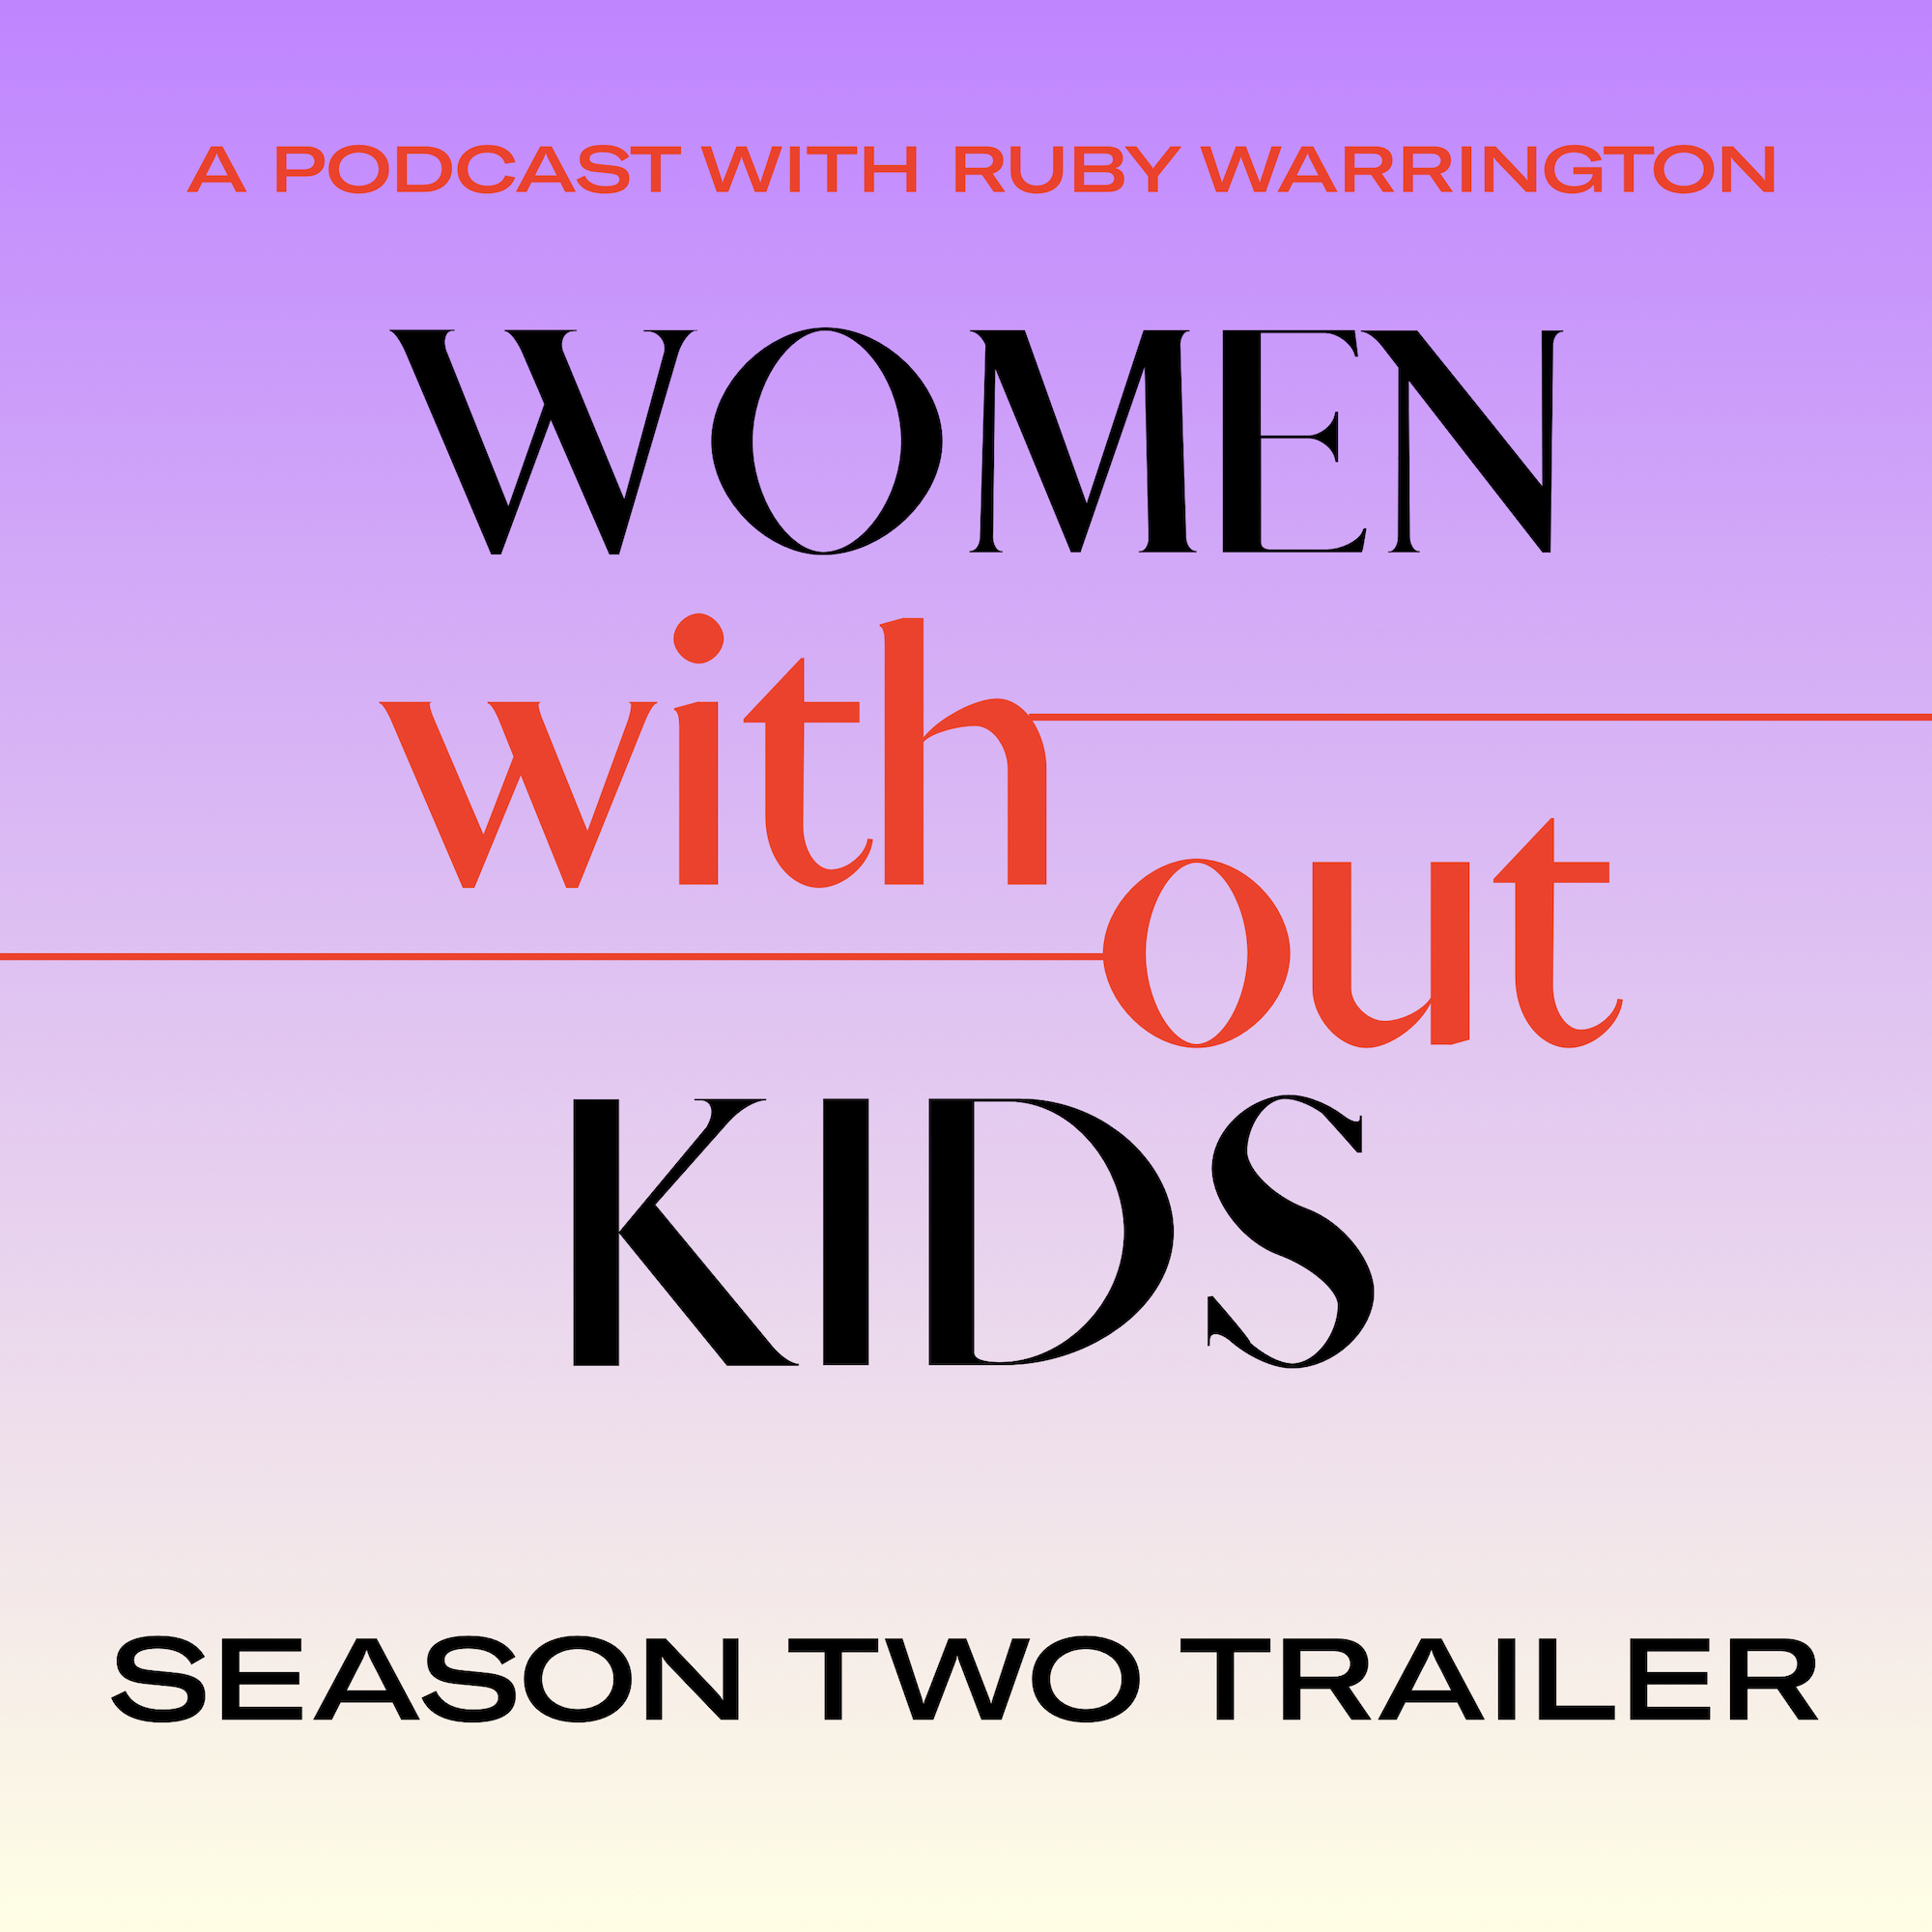 women without kids podcast season 2 trailer ruby warrington